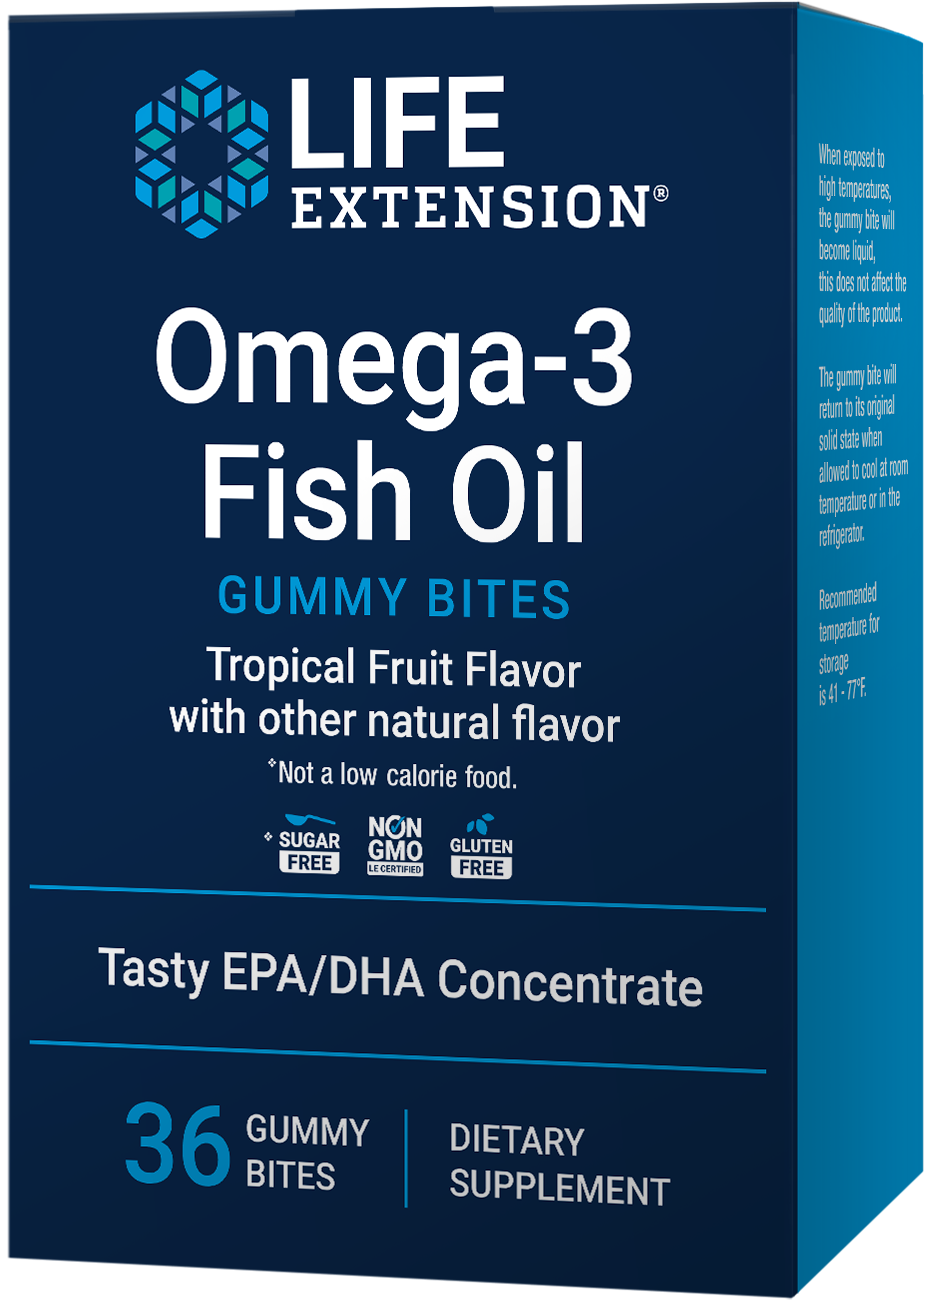 Life Extension's new Omega-3 Fish Oil Gummy Bites Tropical Fruit Flavor